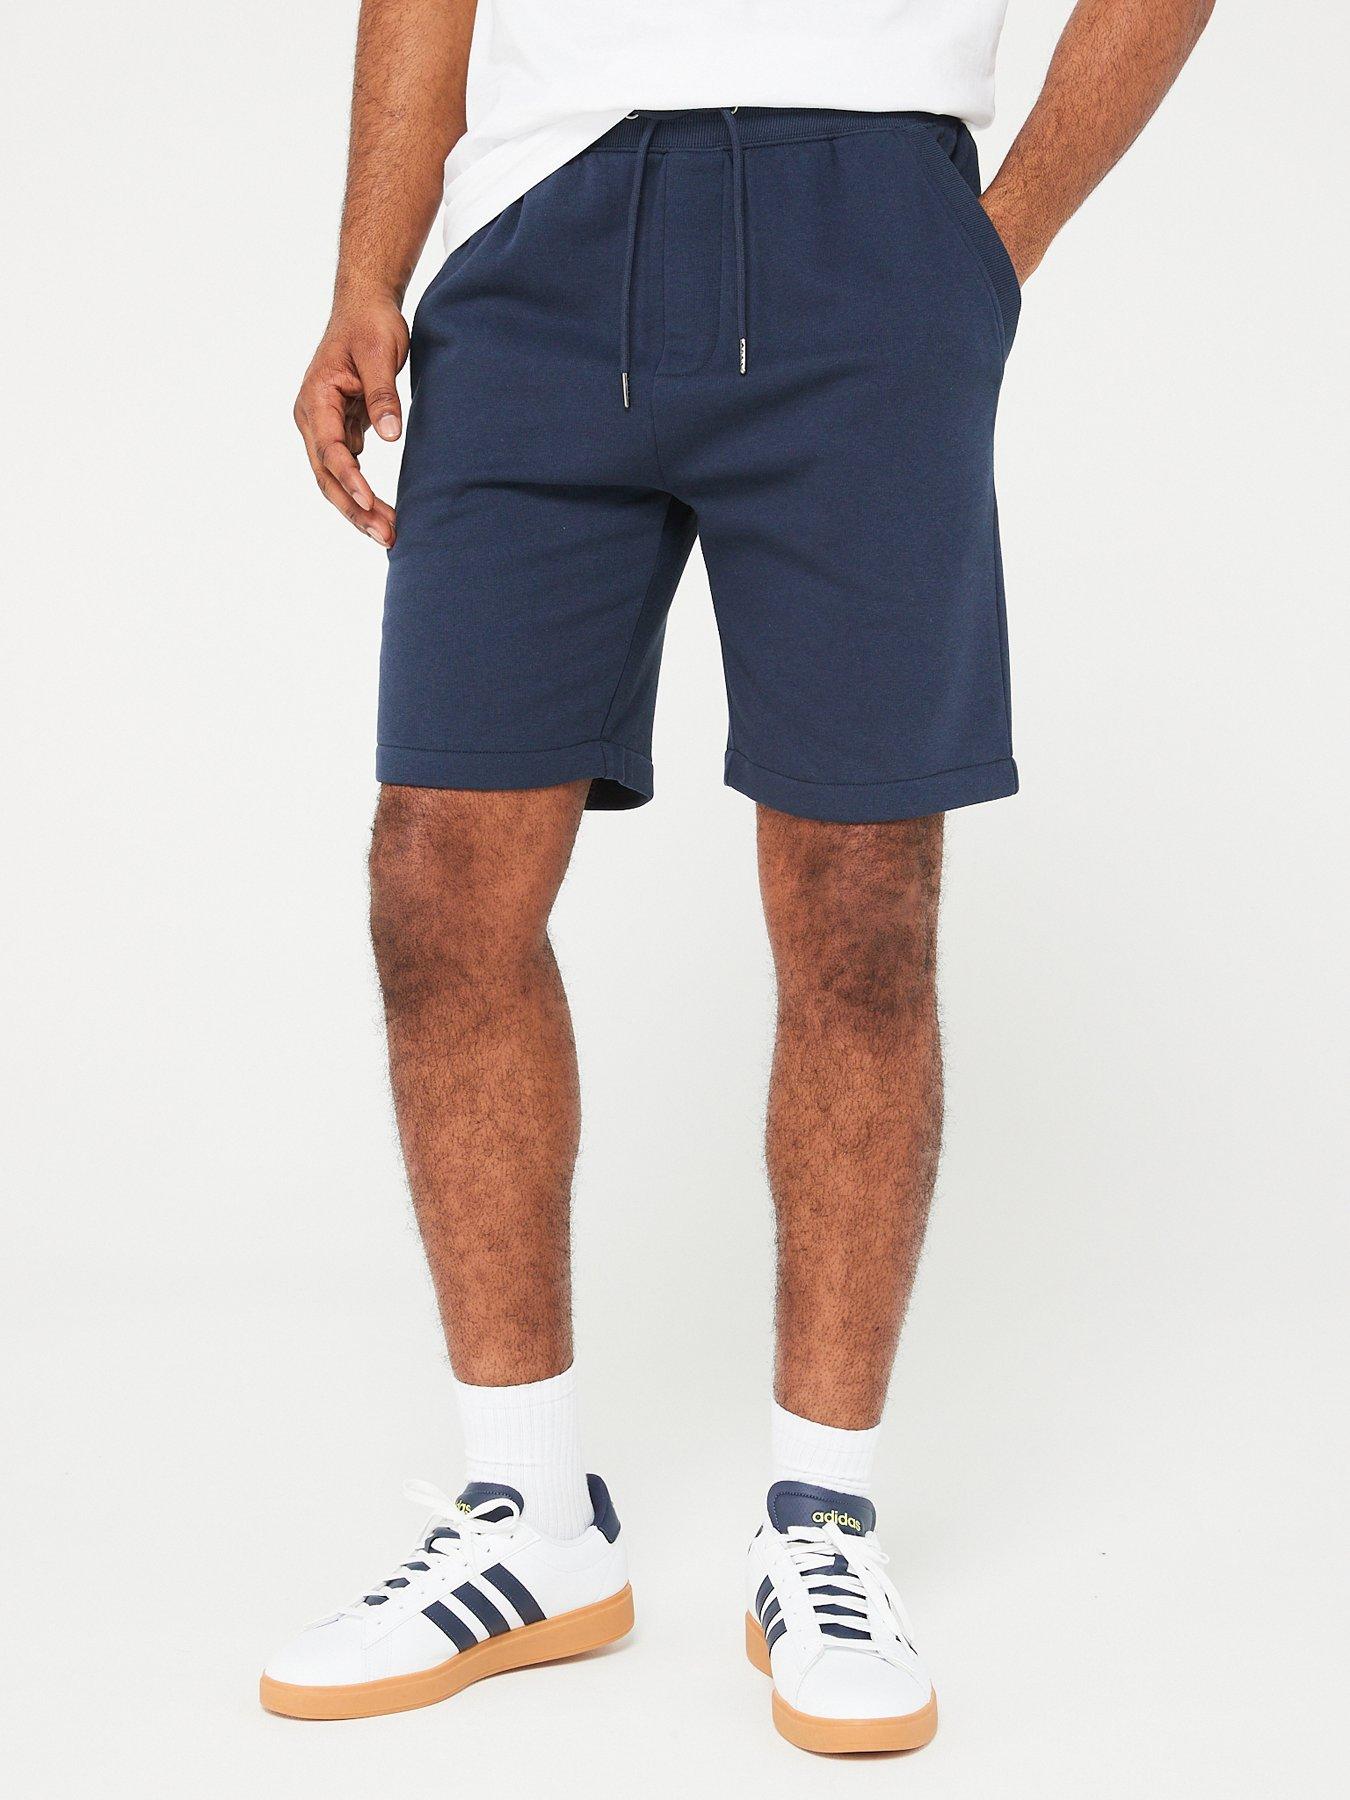 Jogger Shorts Short | Jersey Men\'s Men\'s